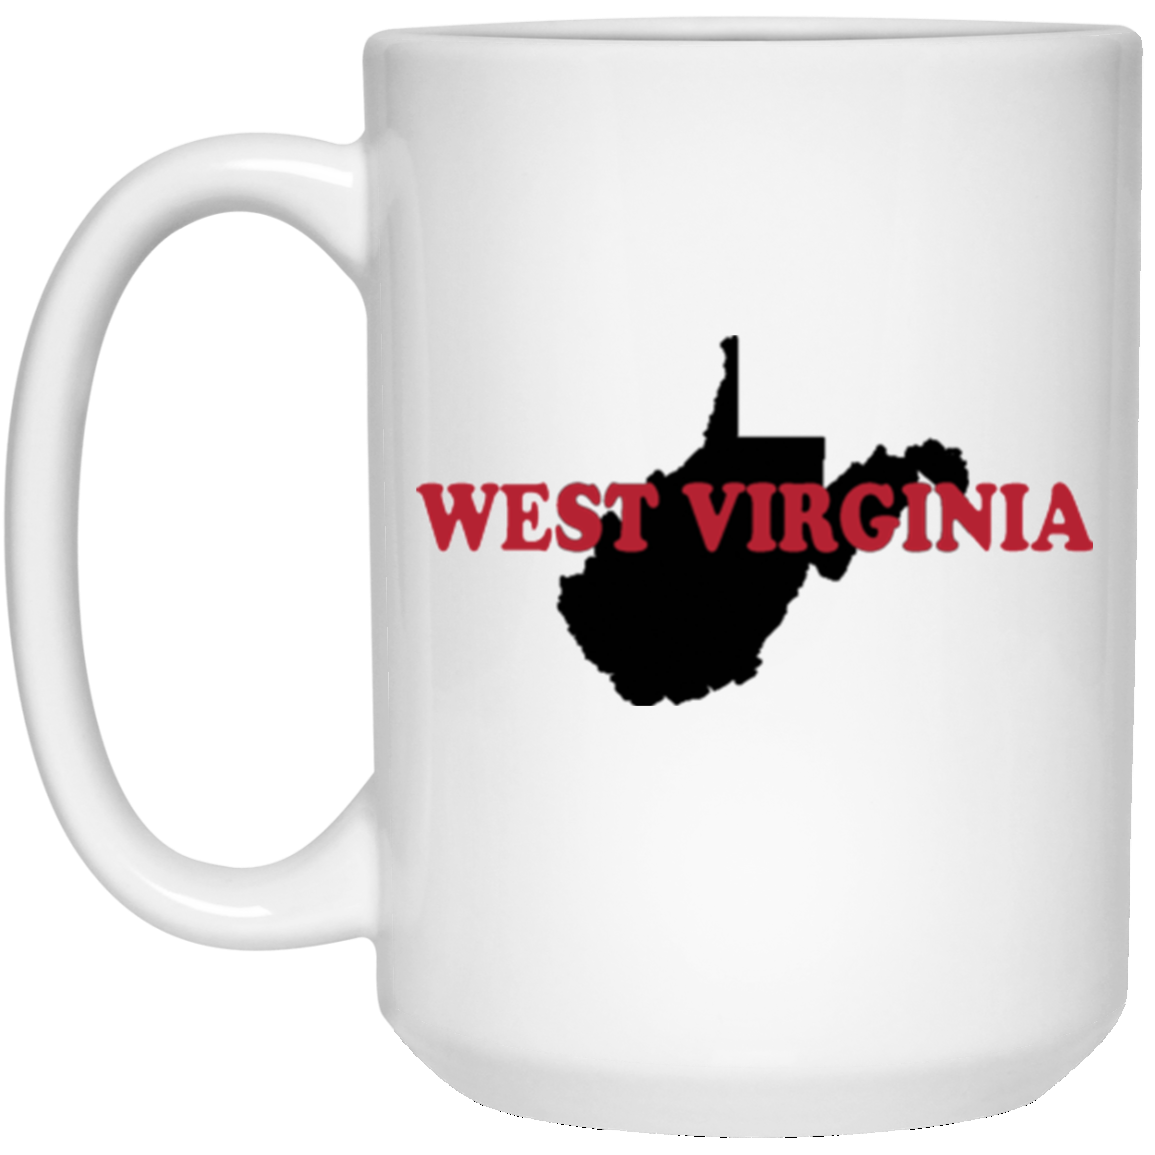 West Virginia Mug